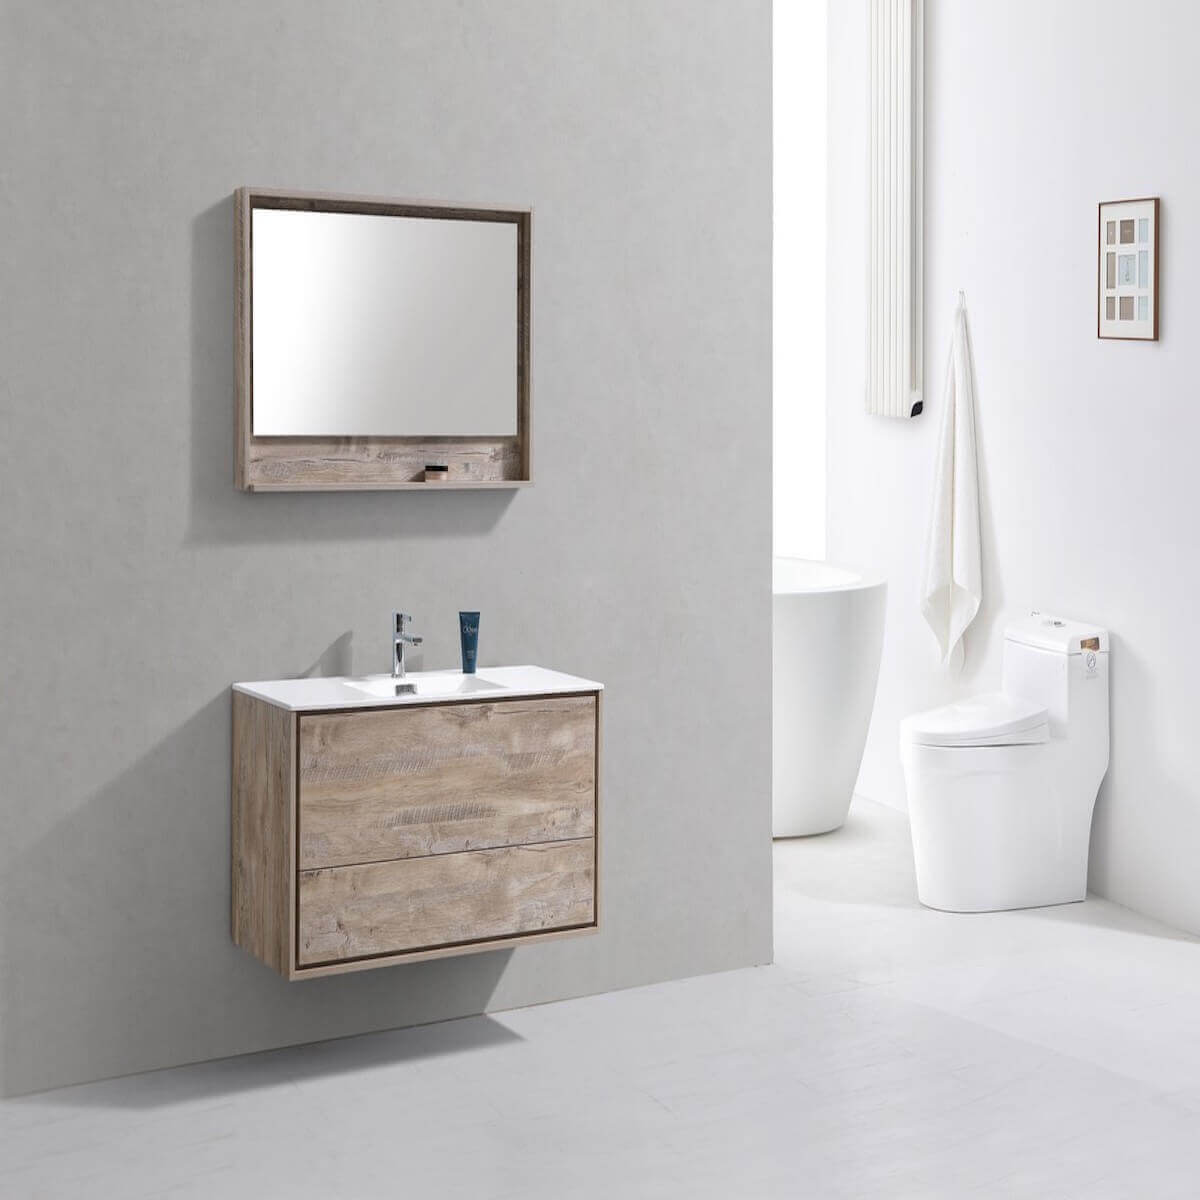 KubeBath DeLusso 48" Nature Wood Wall Mount Single Vanity DL48S-NW in Bathroom #finish_nature wood